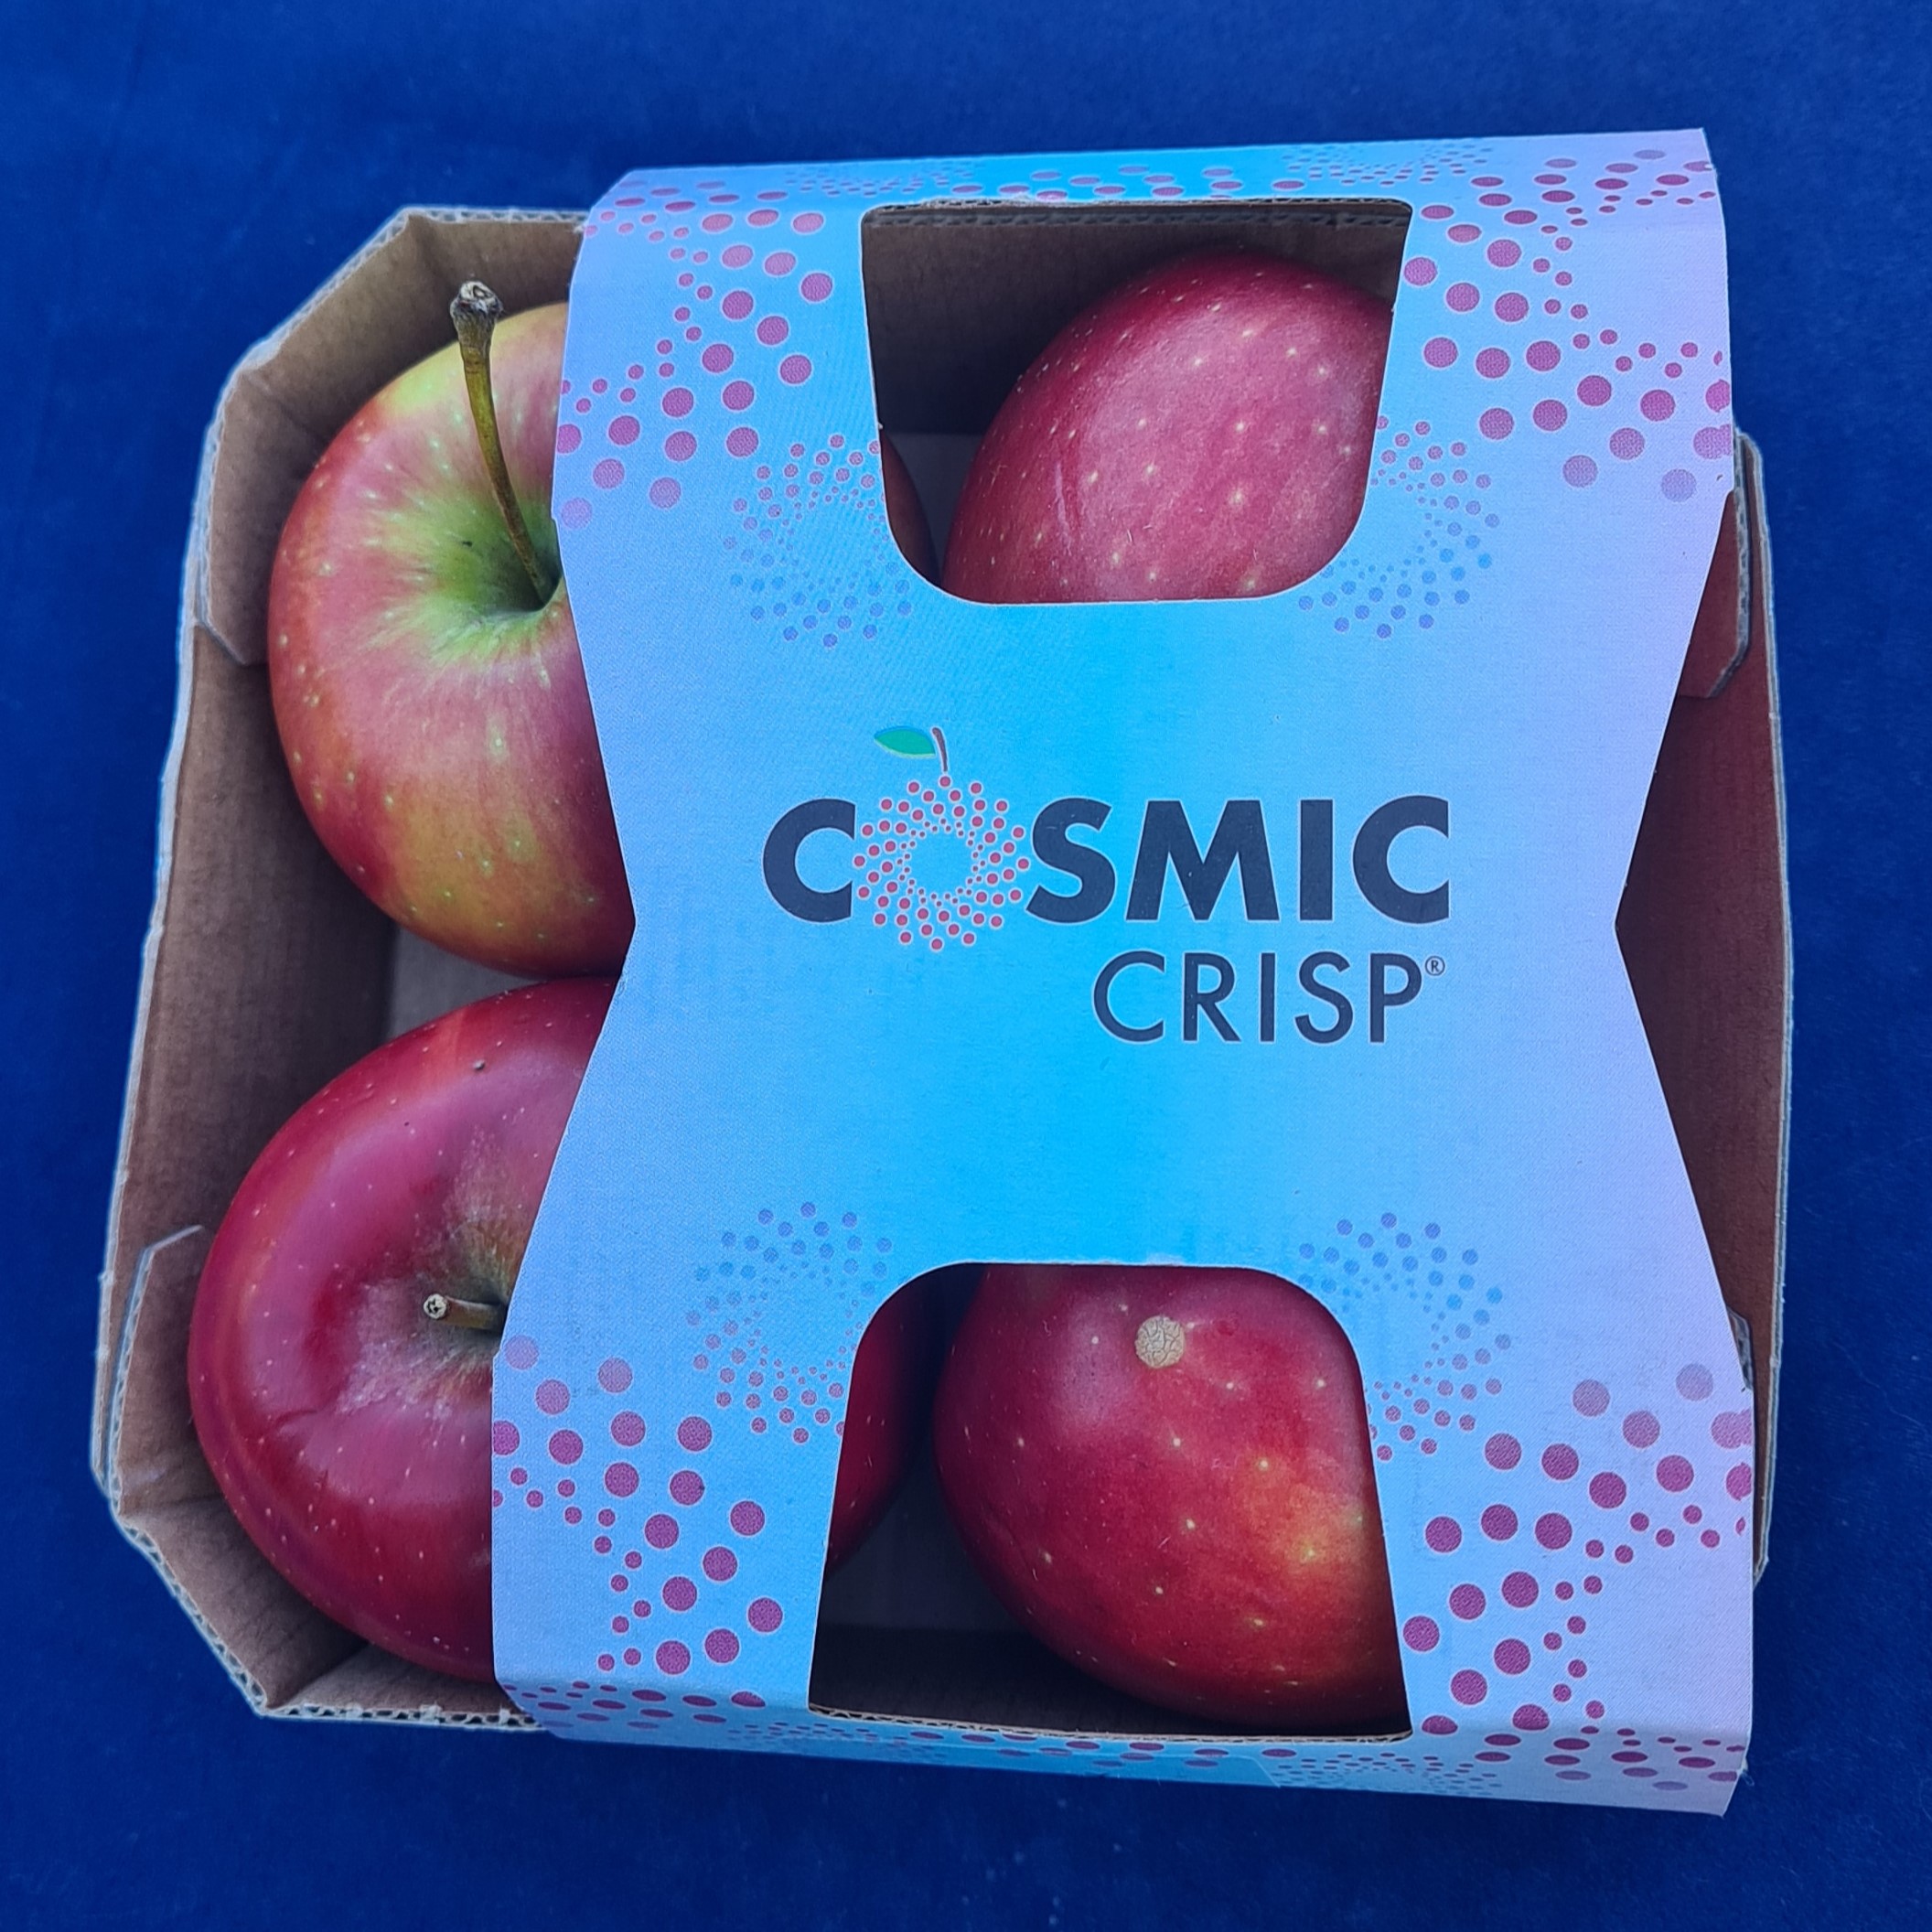 Will new Cosmic Crisp apple, out Dec. 1, dethrone Honeycrisp?